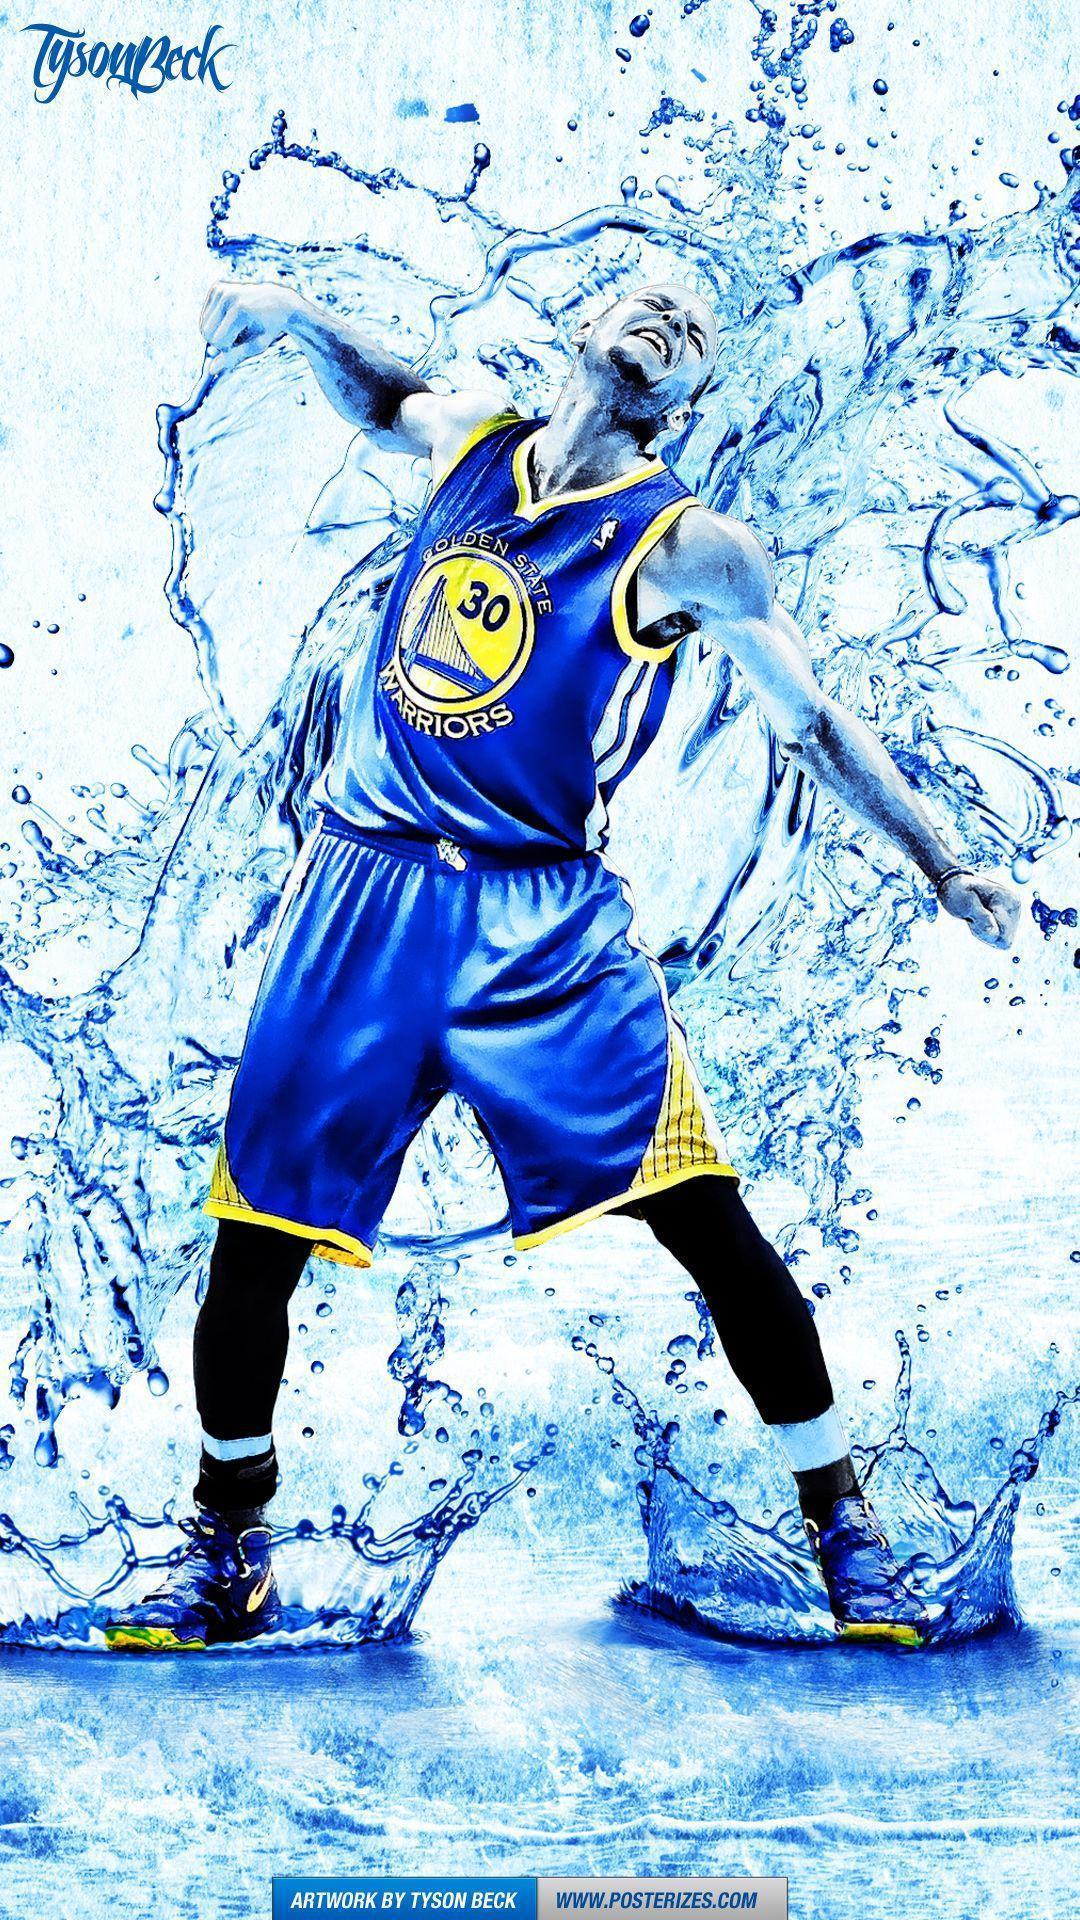 Stephen Curry \'Splash\' Wallpaper. Posterizes. NBA Wallpaper